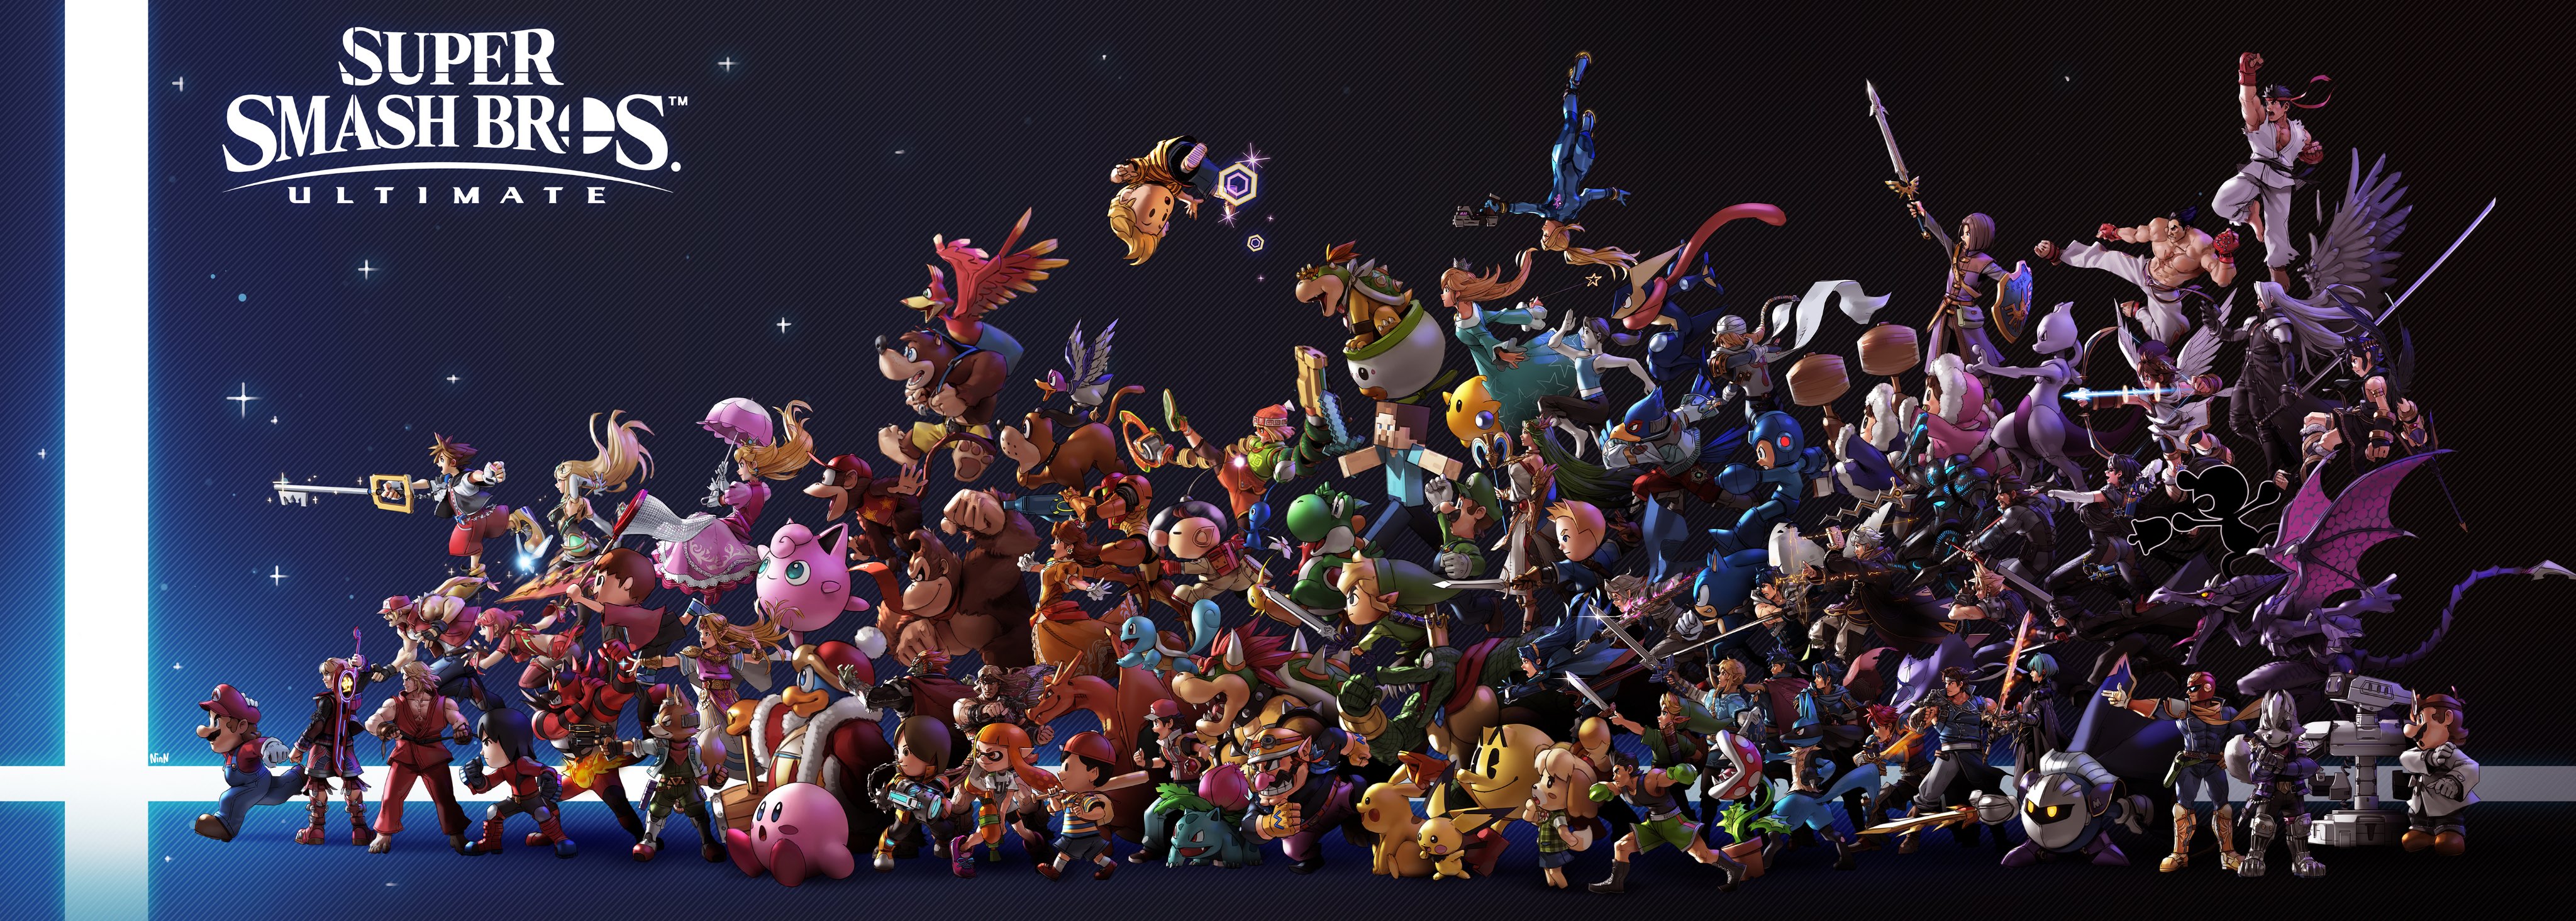 Video Game Super Smash Bros. Ultimate HD Wallpaper by Callum Nakajima